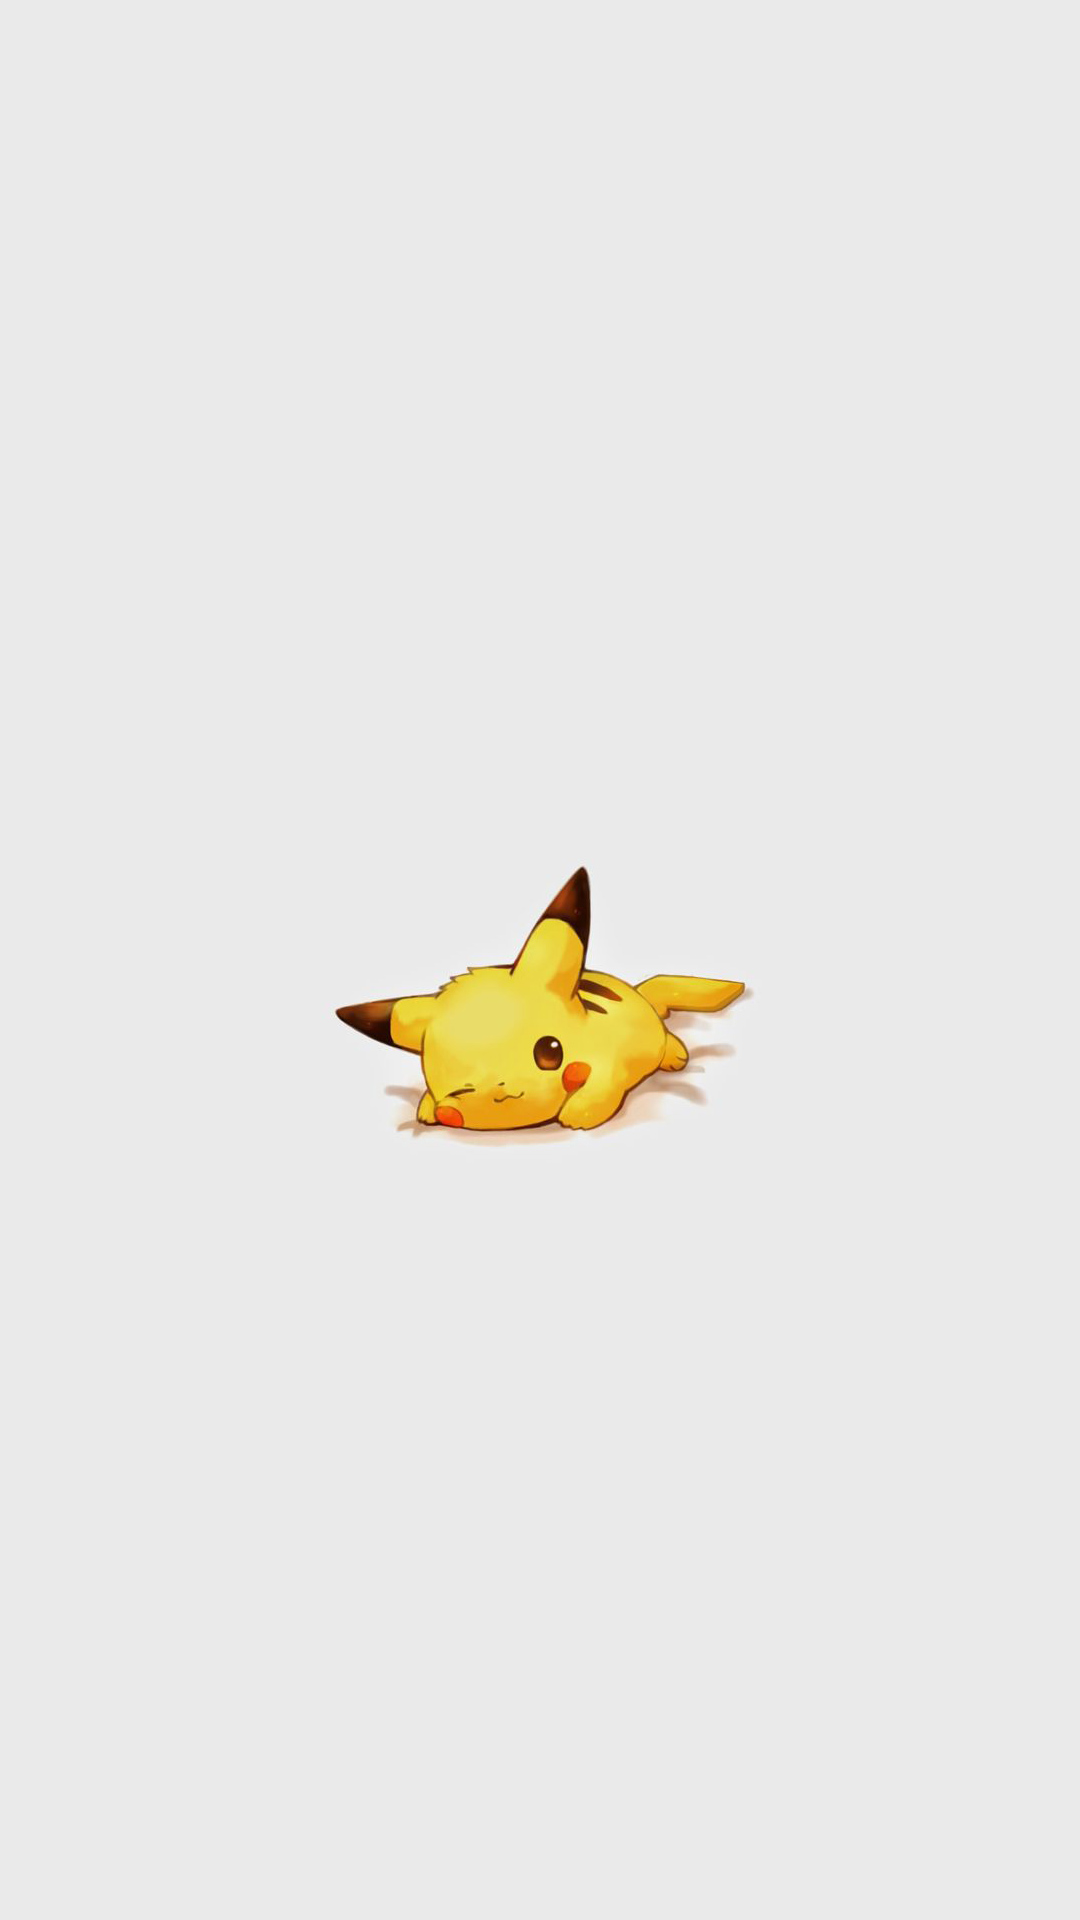 Cute Pikachu Pokemon Go Illustration Android Wallpaper - Cute Pokemon Wallpaper Hd , HD Wallpaper & Backgrounds